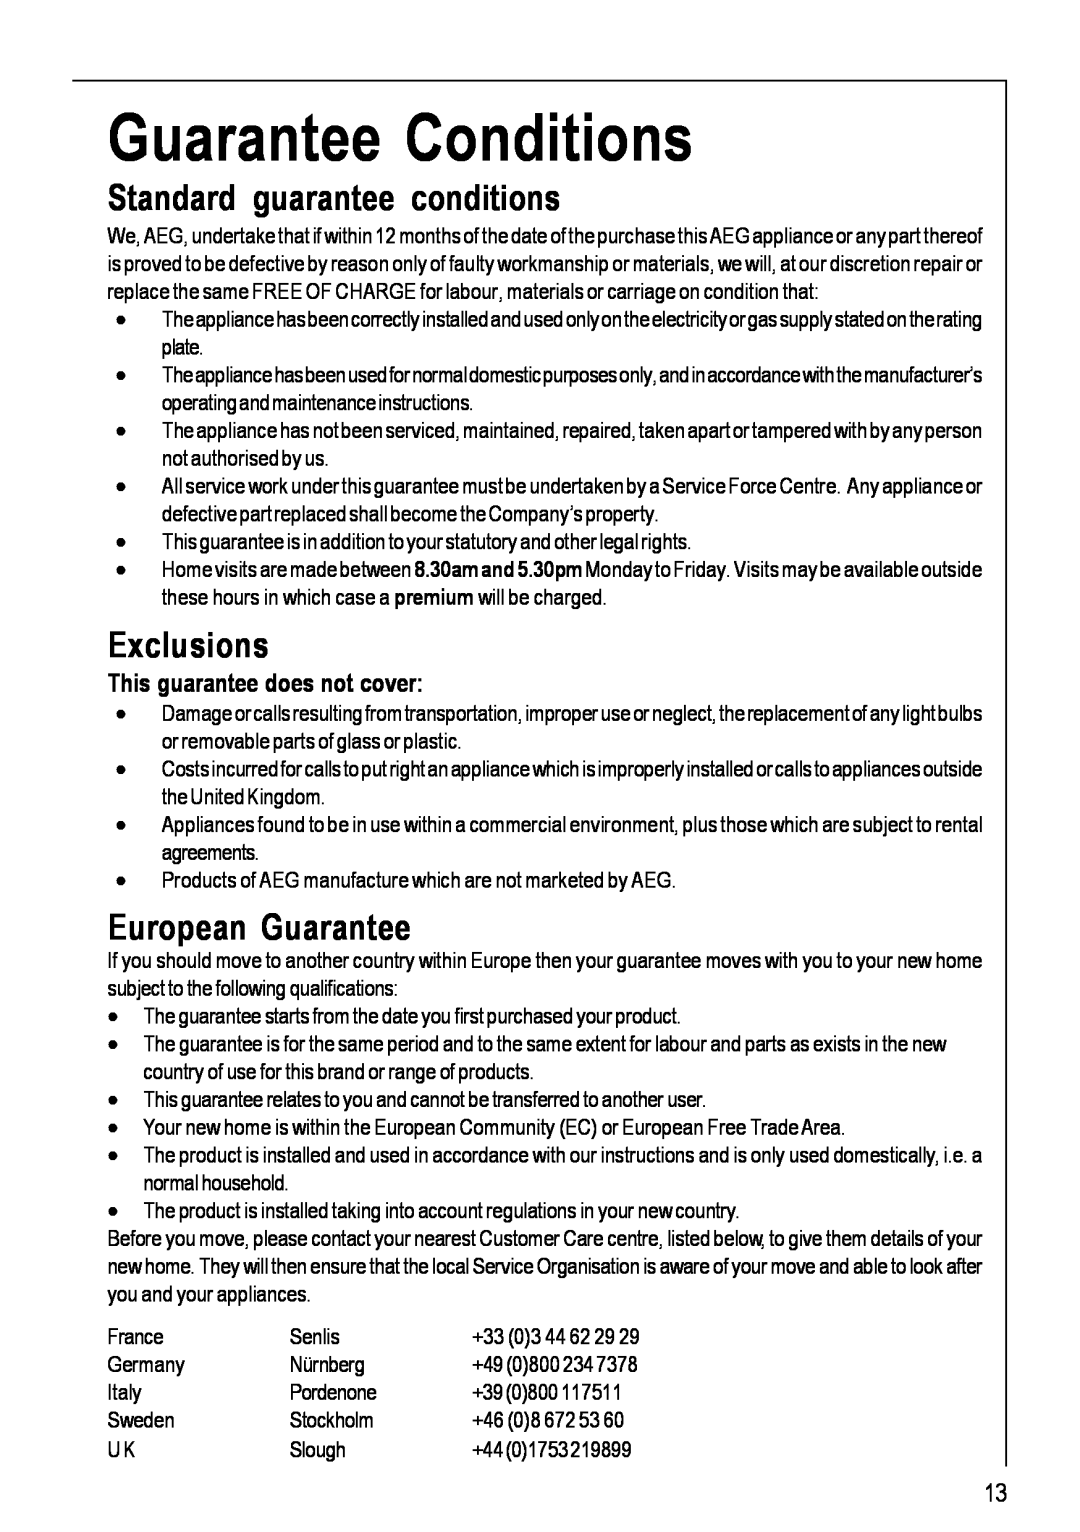 Electrolux 116 K operating instructions Guarantee Conditions, Standard guarantee conditions, Exclusions, European Guarantee 